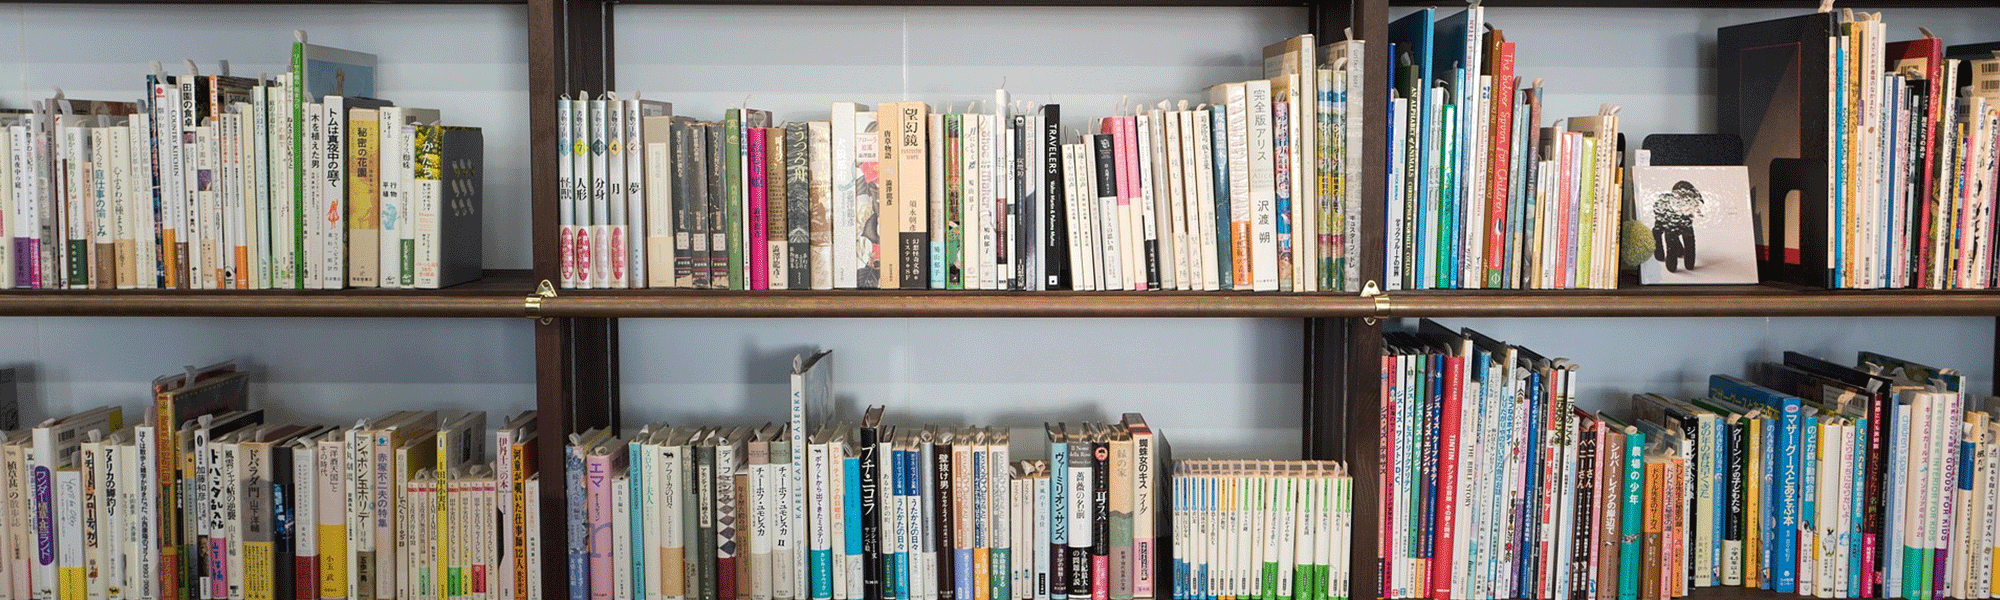 image of books organize